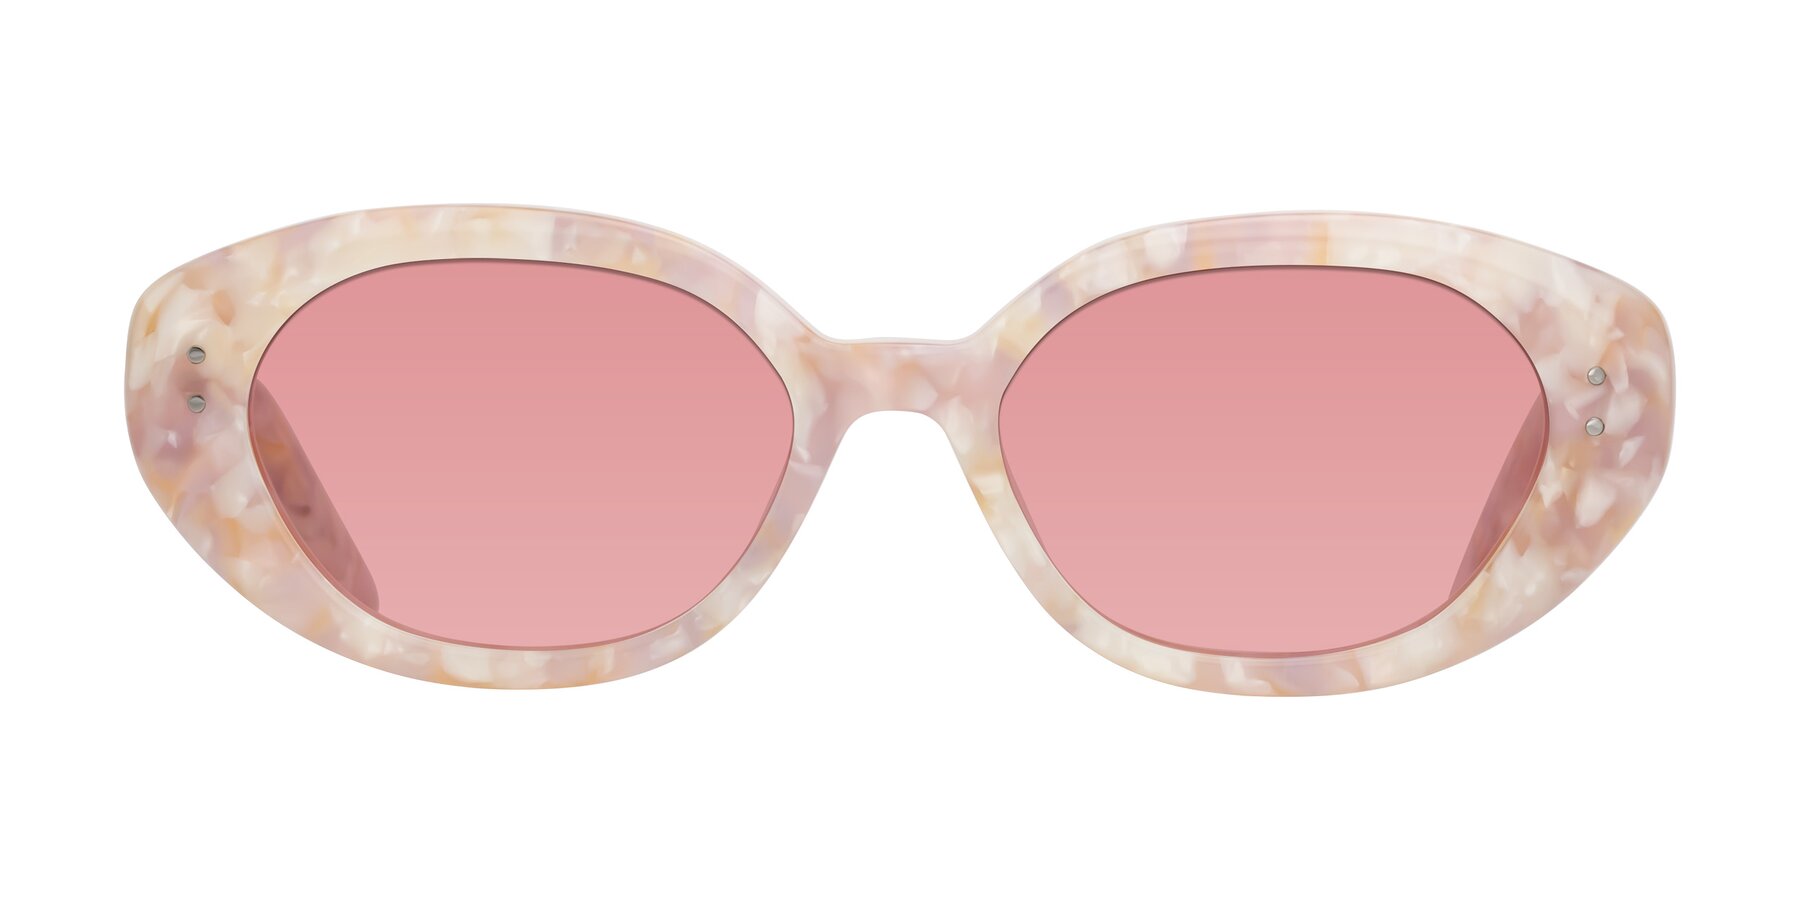 Quuen - Light Pink Tortoise Sunglasses